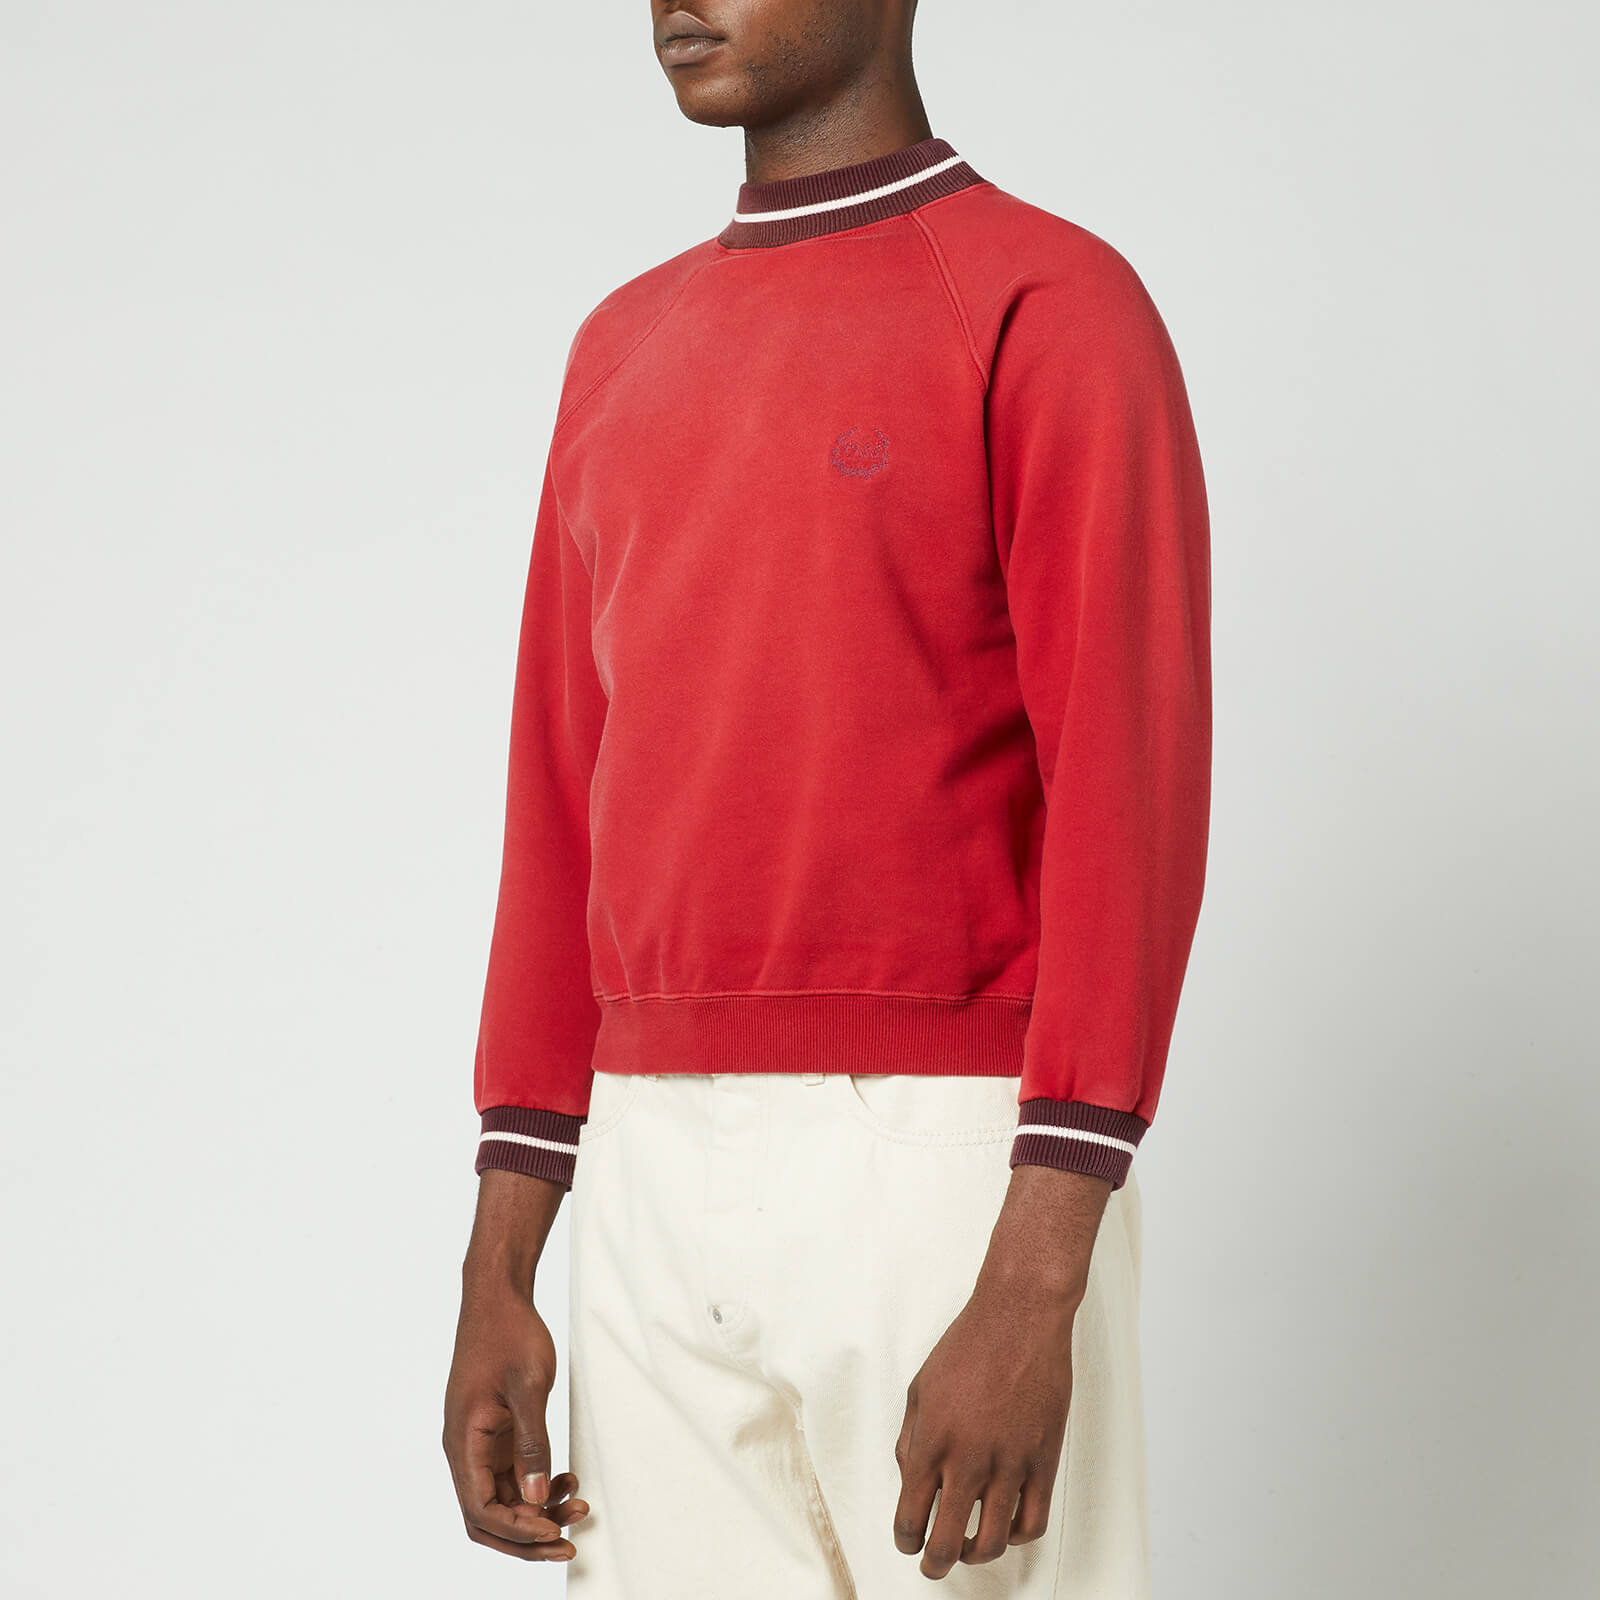 Maison Margiela Men's Cropped Sweatshirt - Red - L